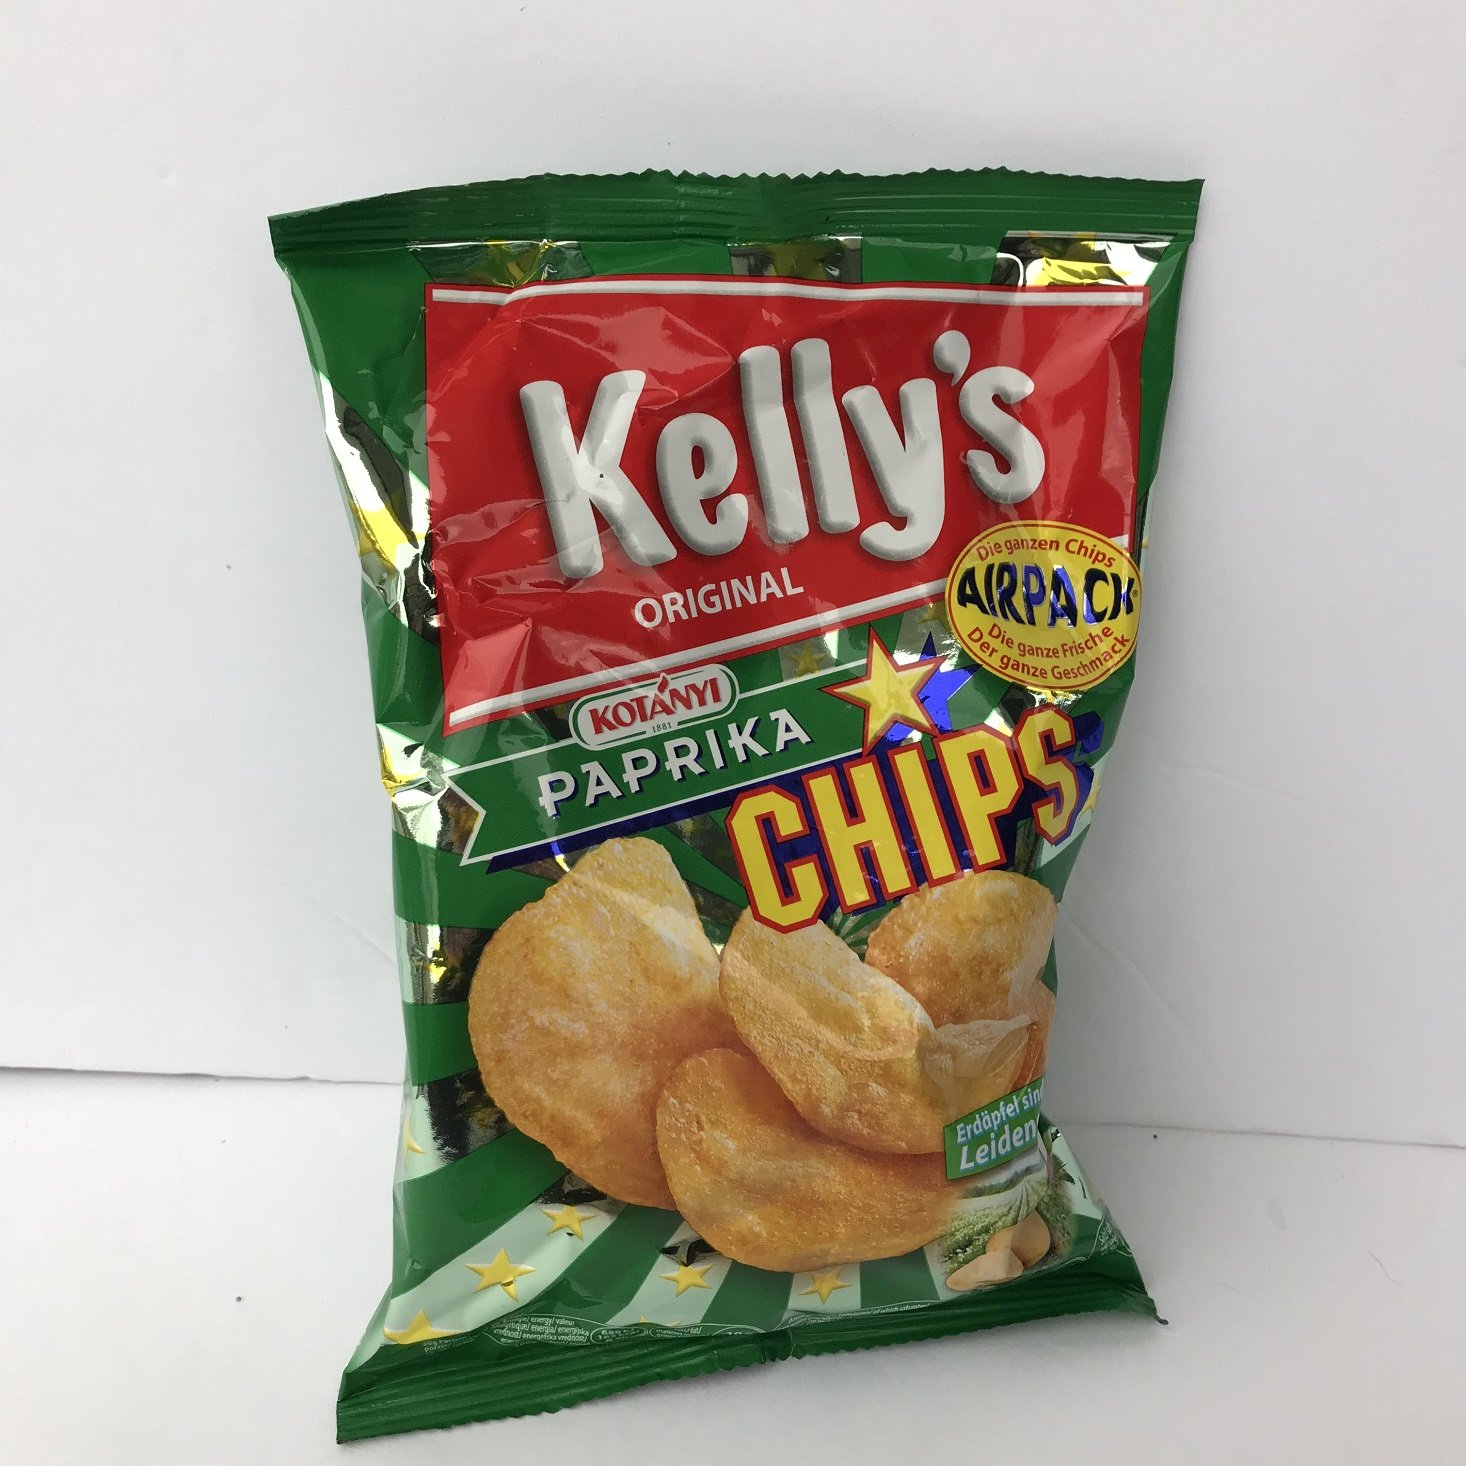 Universal Yums Oct 2019 paprika chips unopened